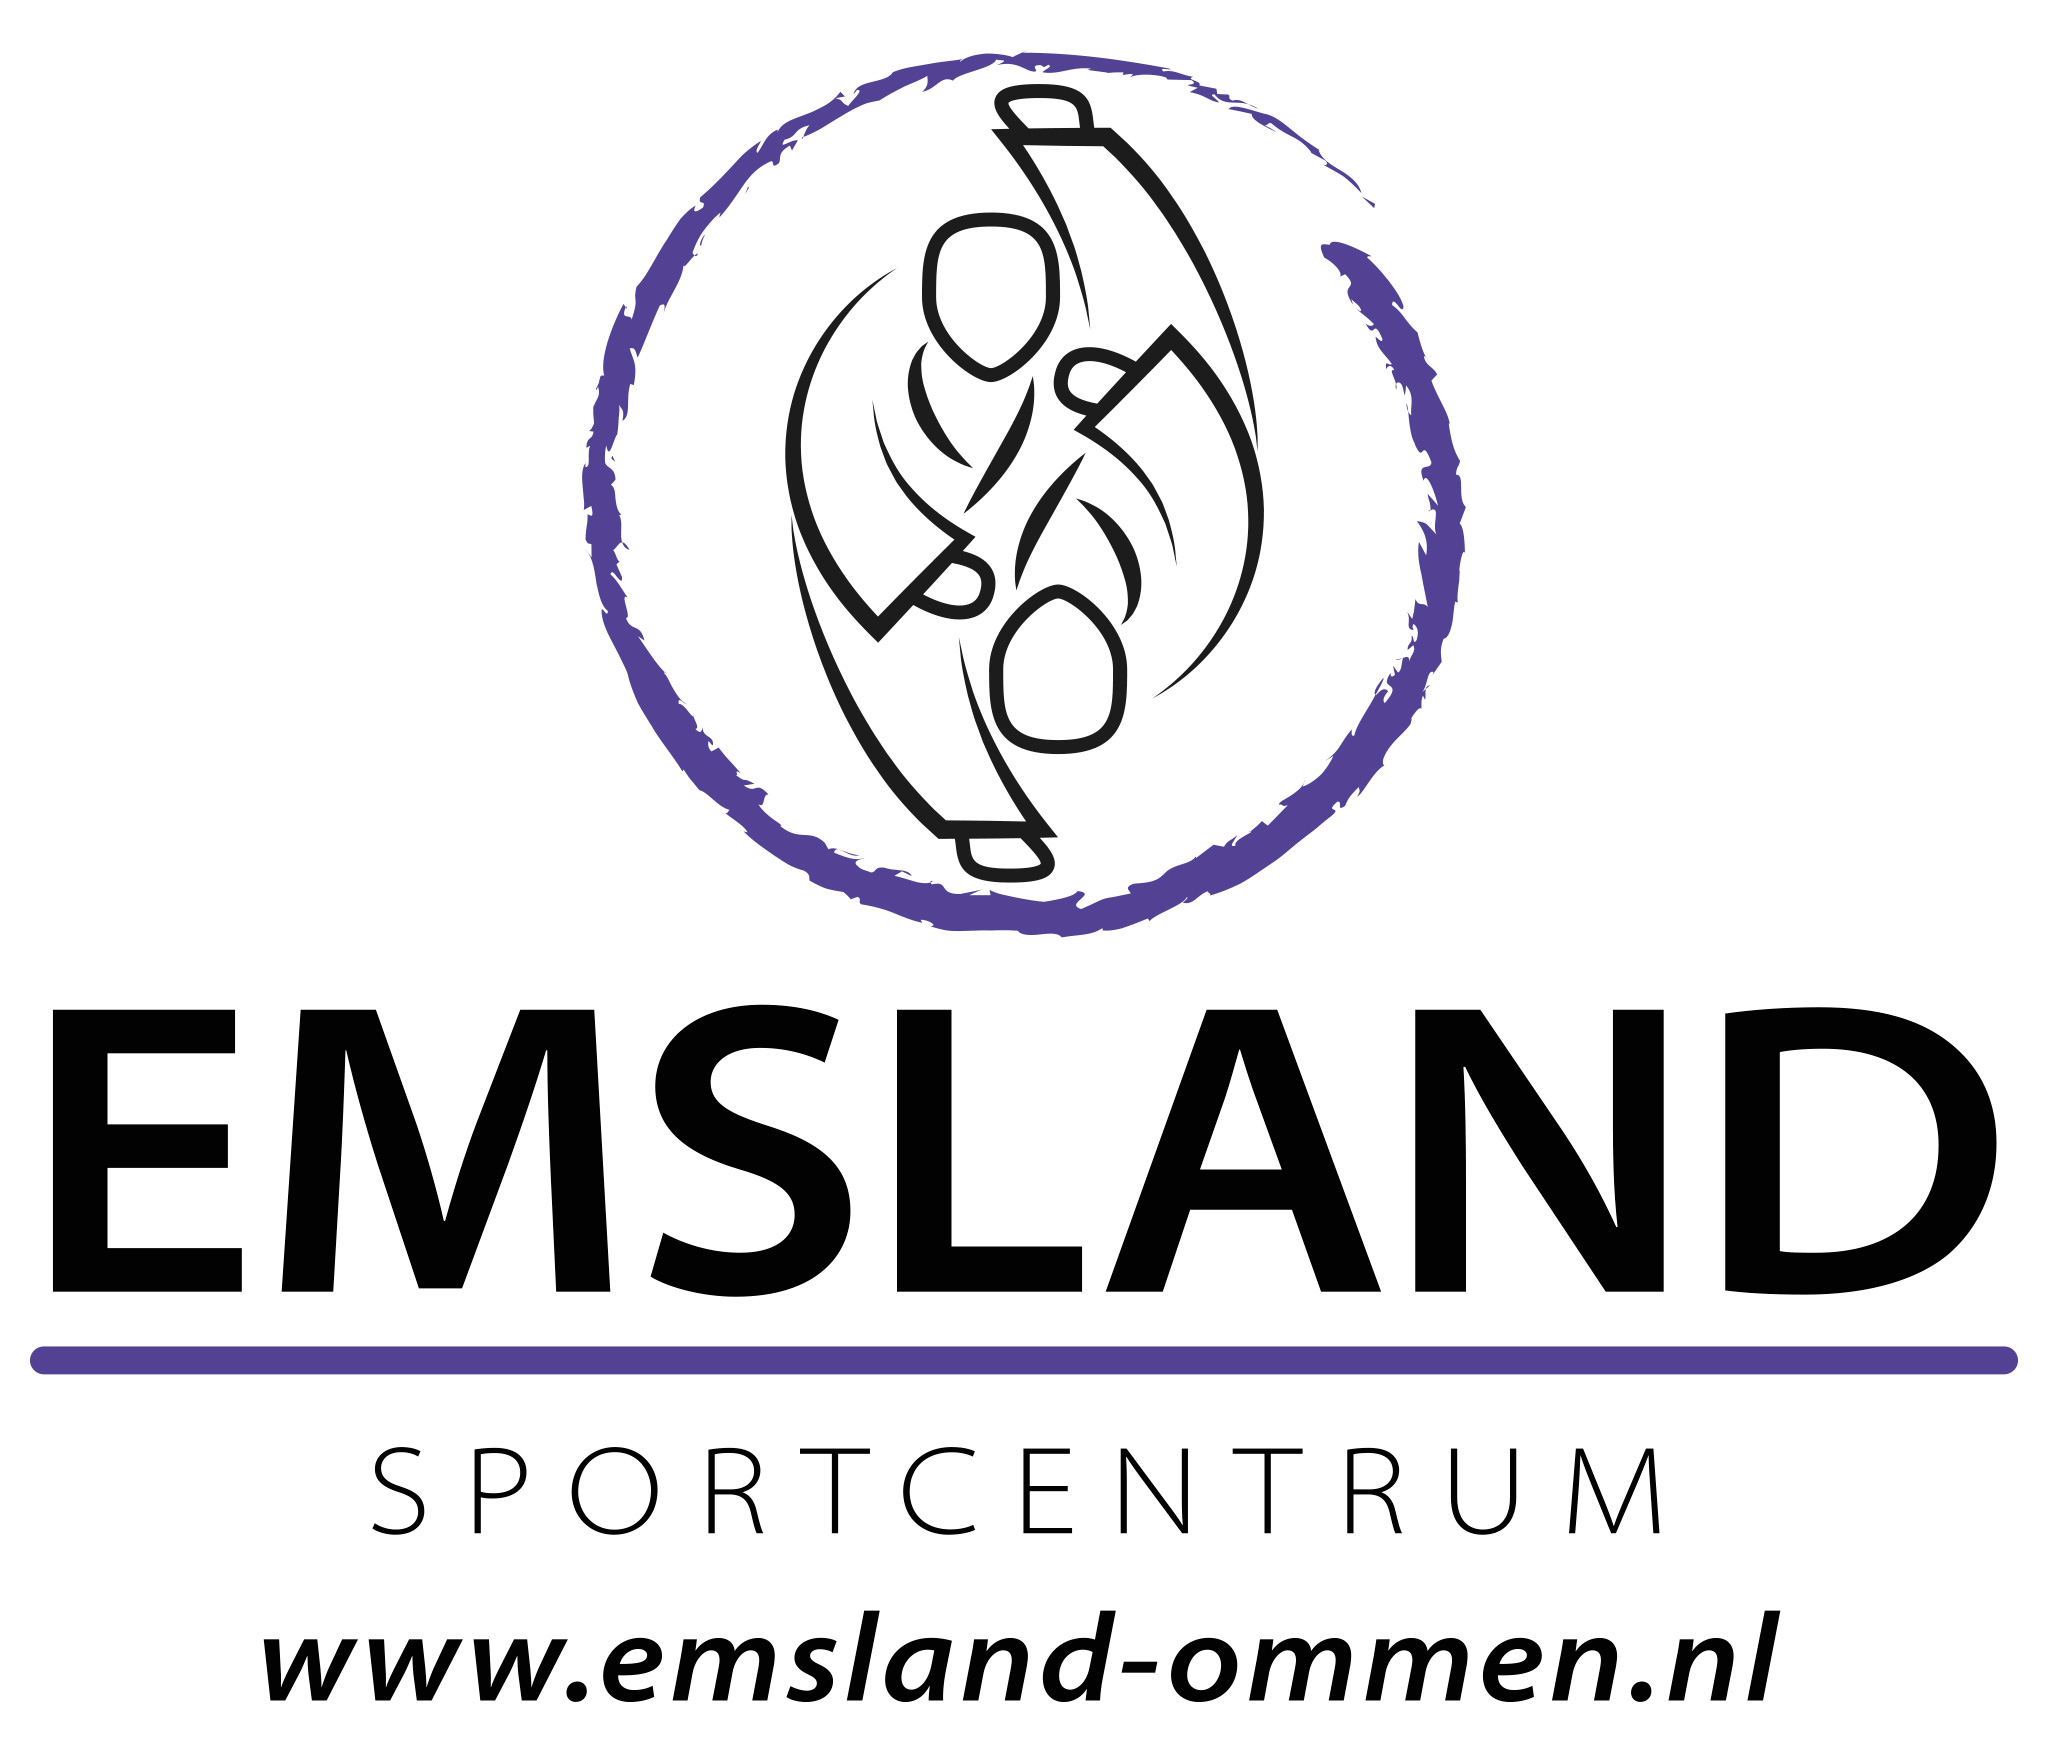 Sportcentrum Emsland